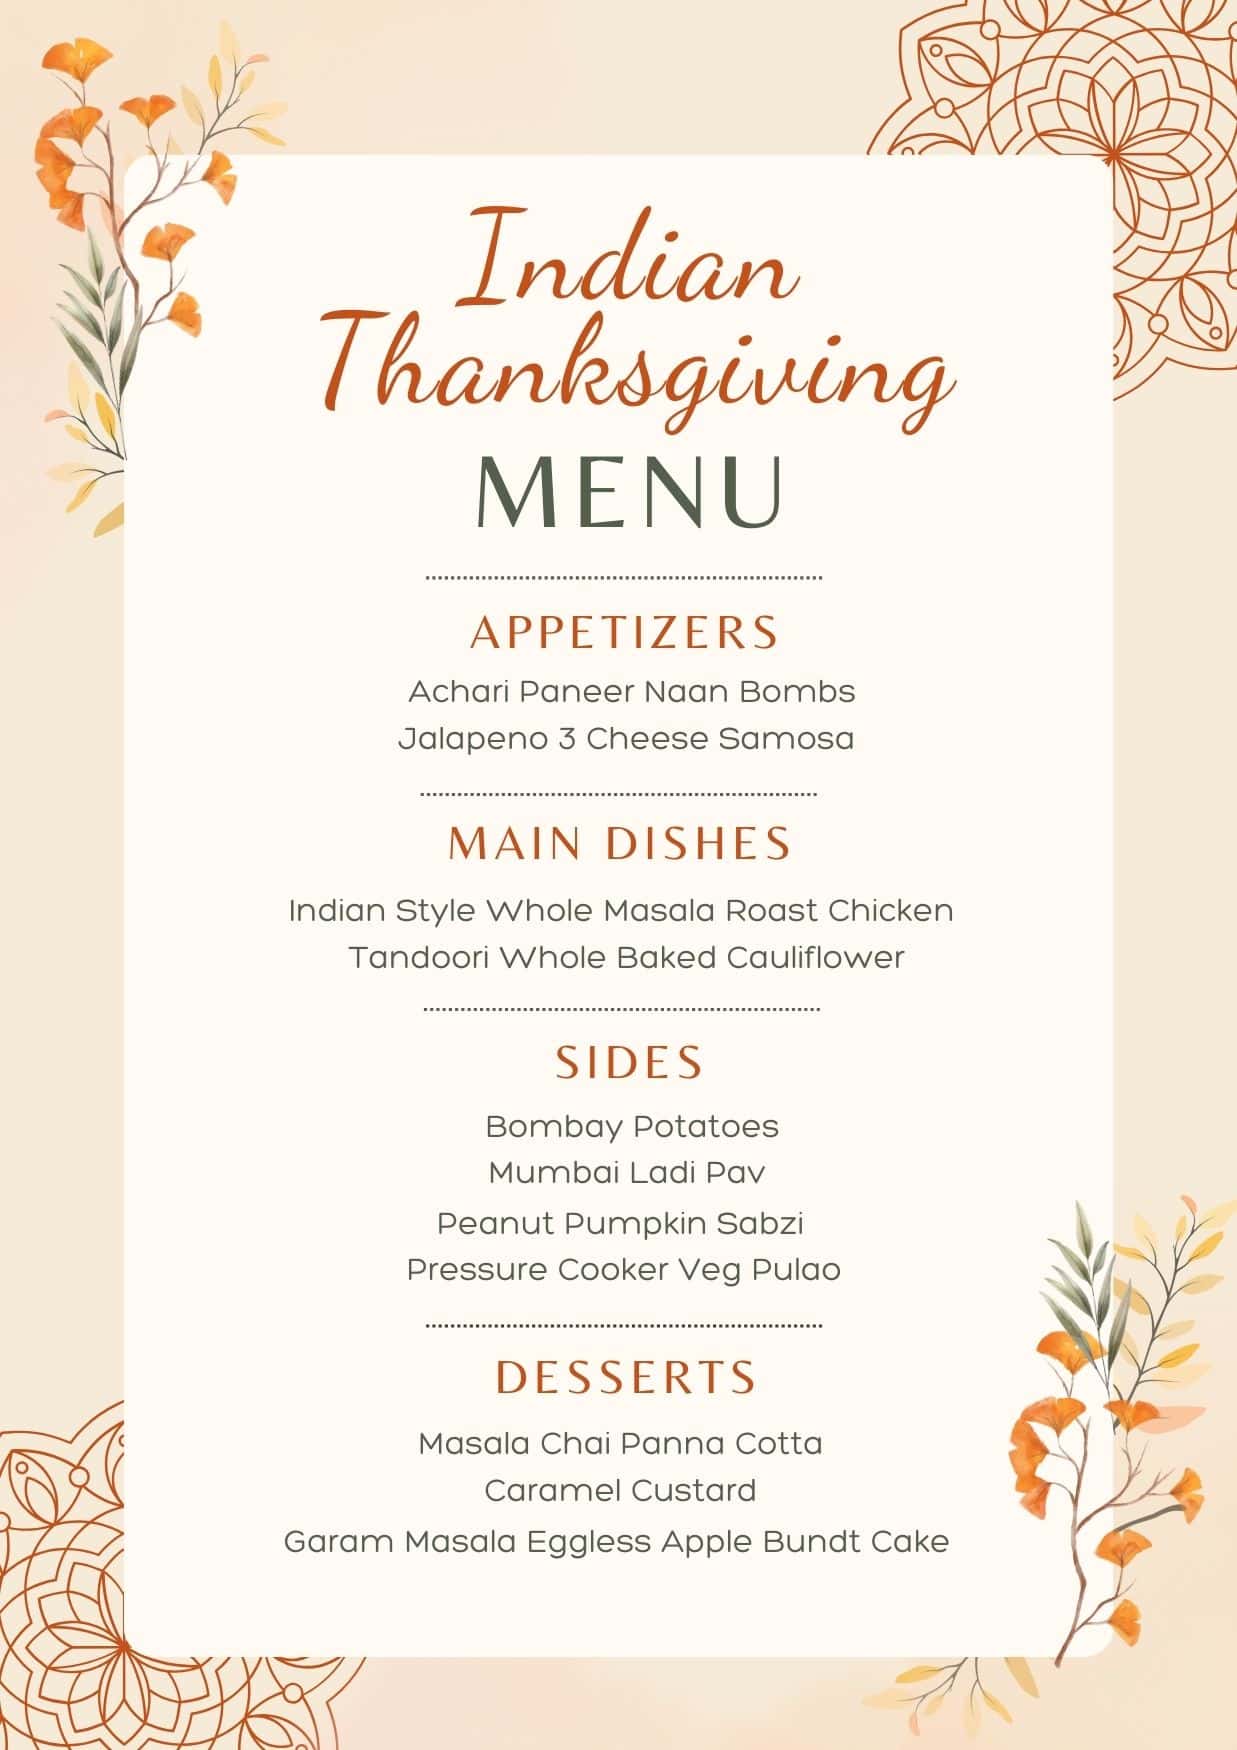 Printable version of an Indian inspired Thanksgiving menu